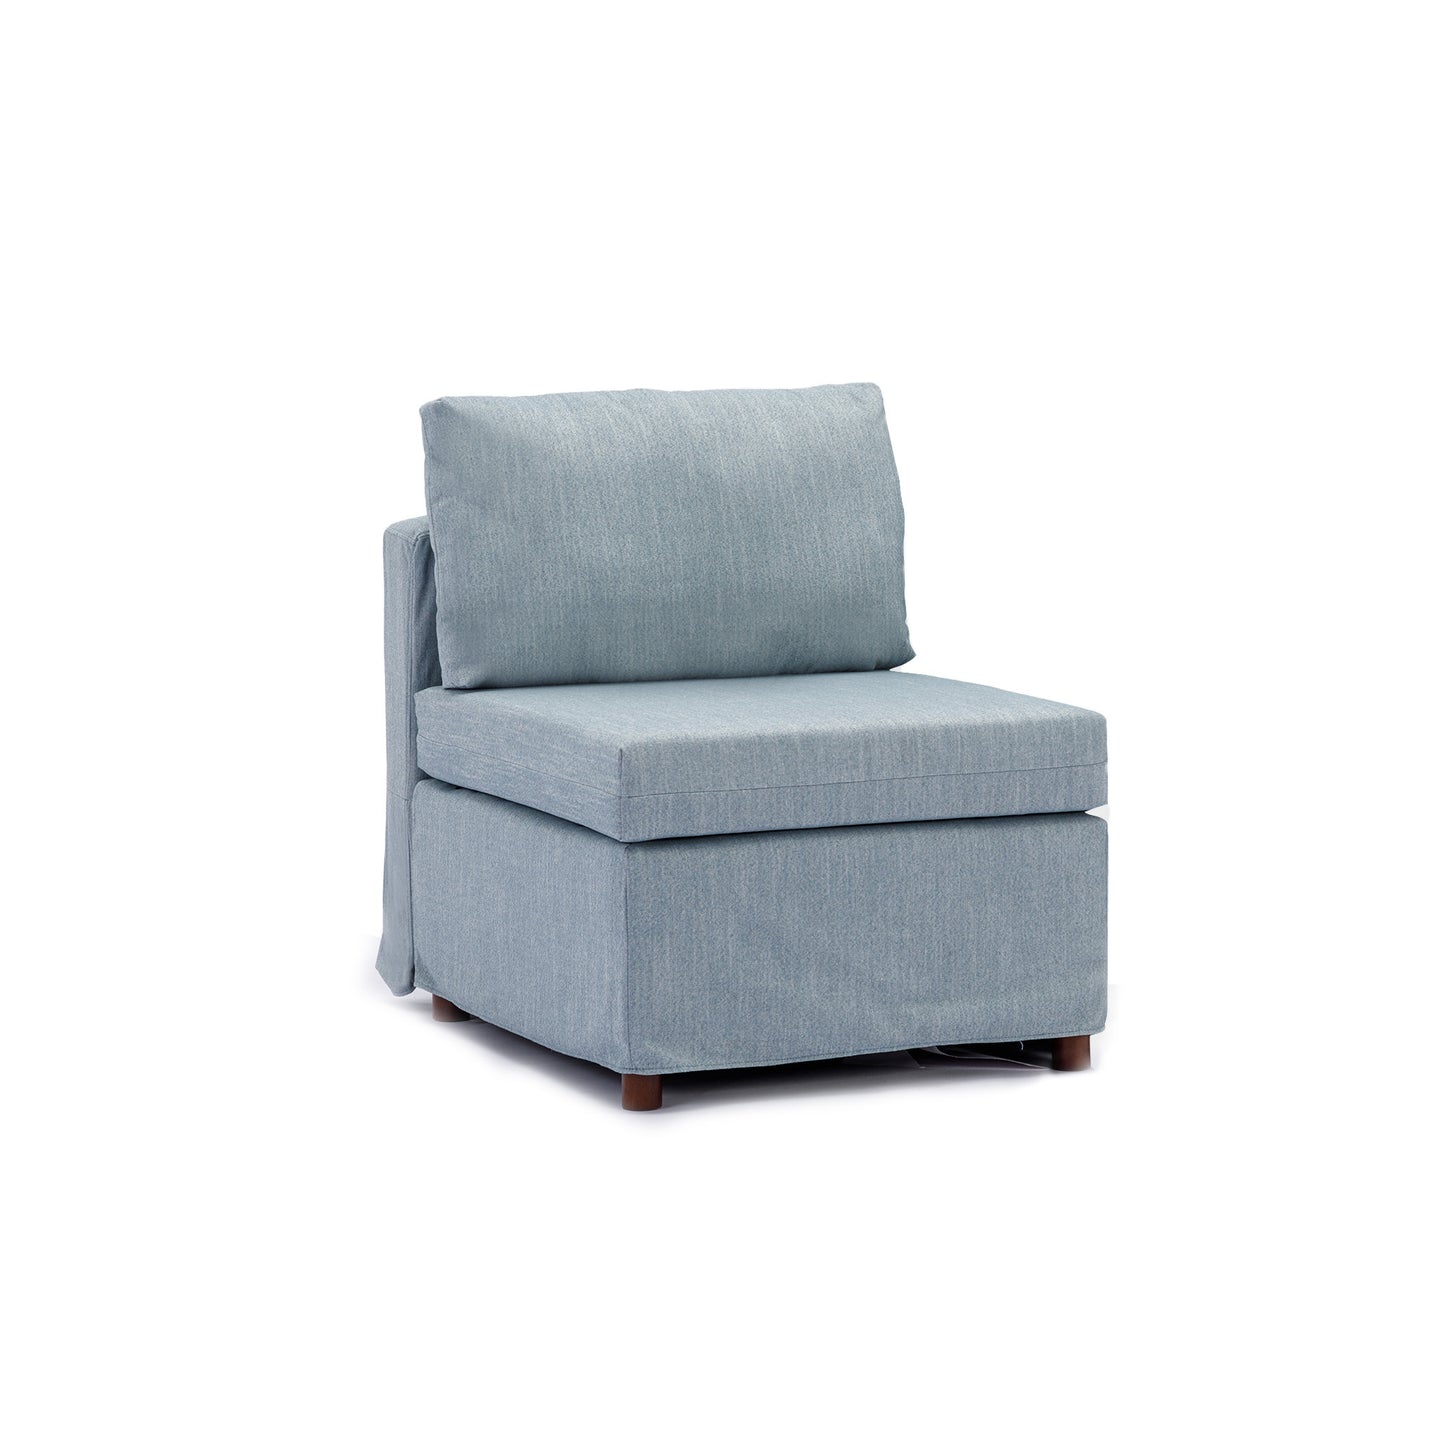 3 Seat Module Sectional Sofa in Light Blue w/ Ottoman